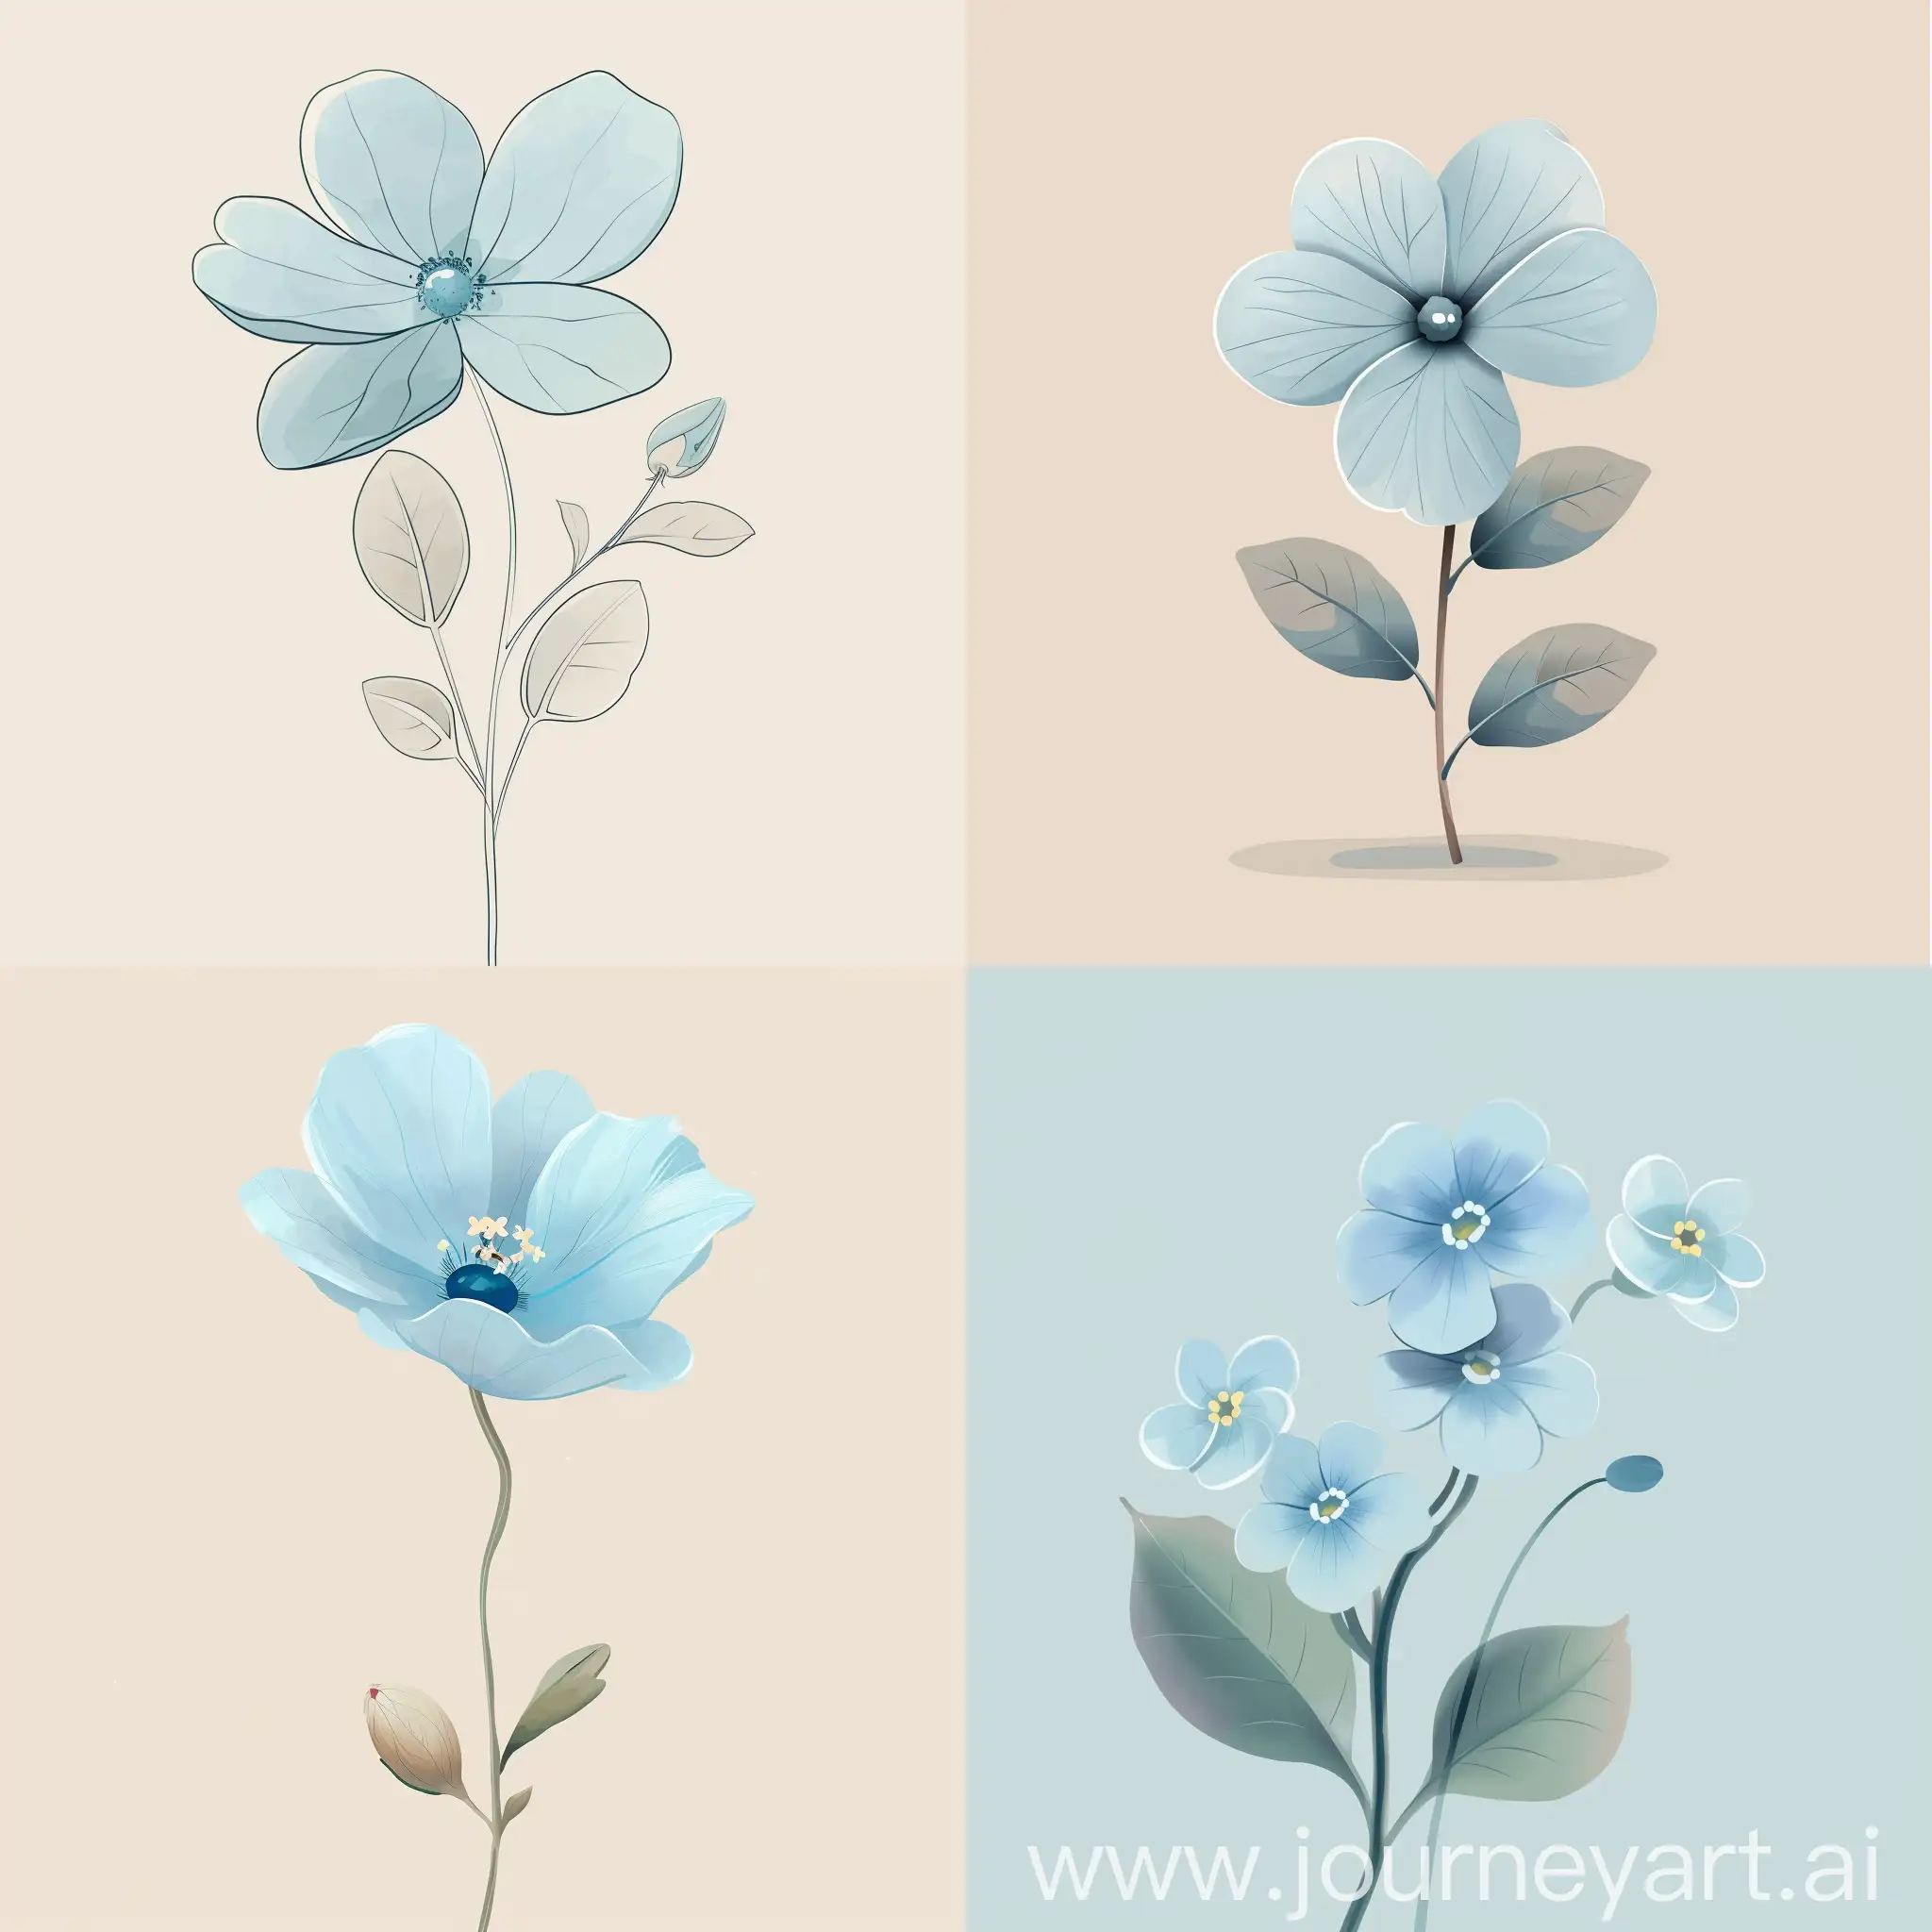 Soft-Pastel-Blue-Cartoon-Tiny-Flower-Illustration